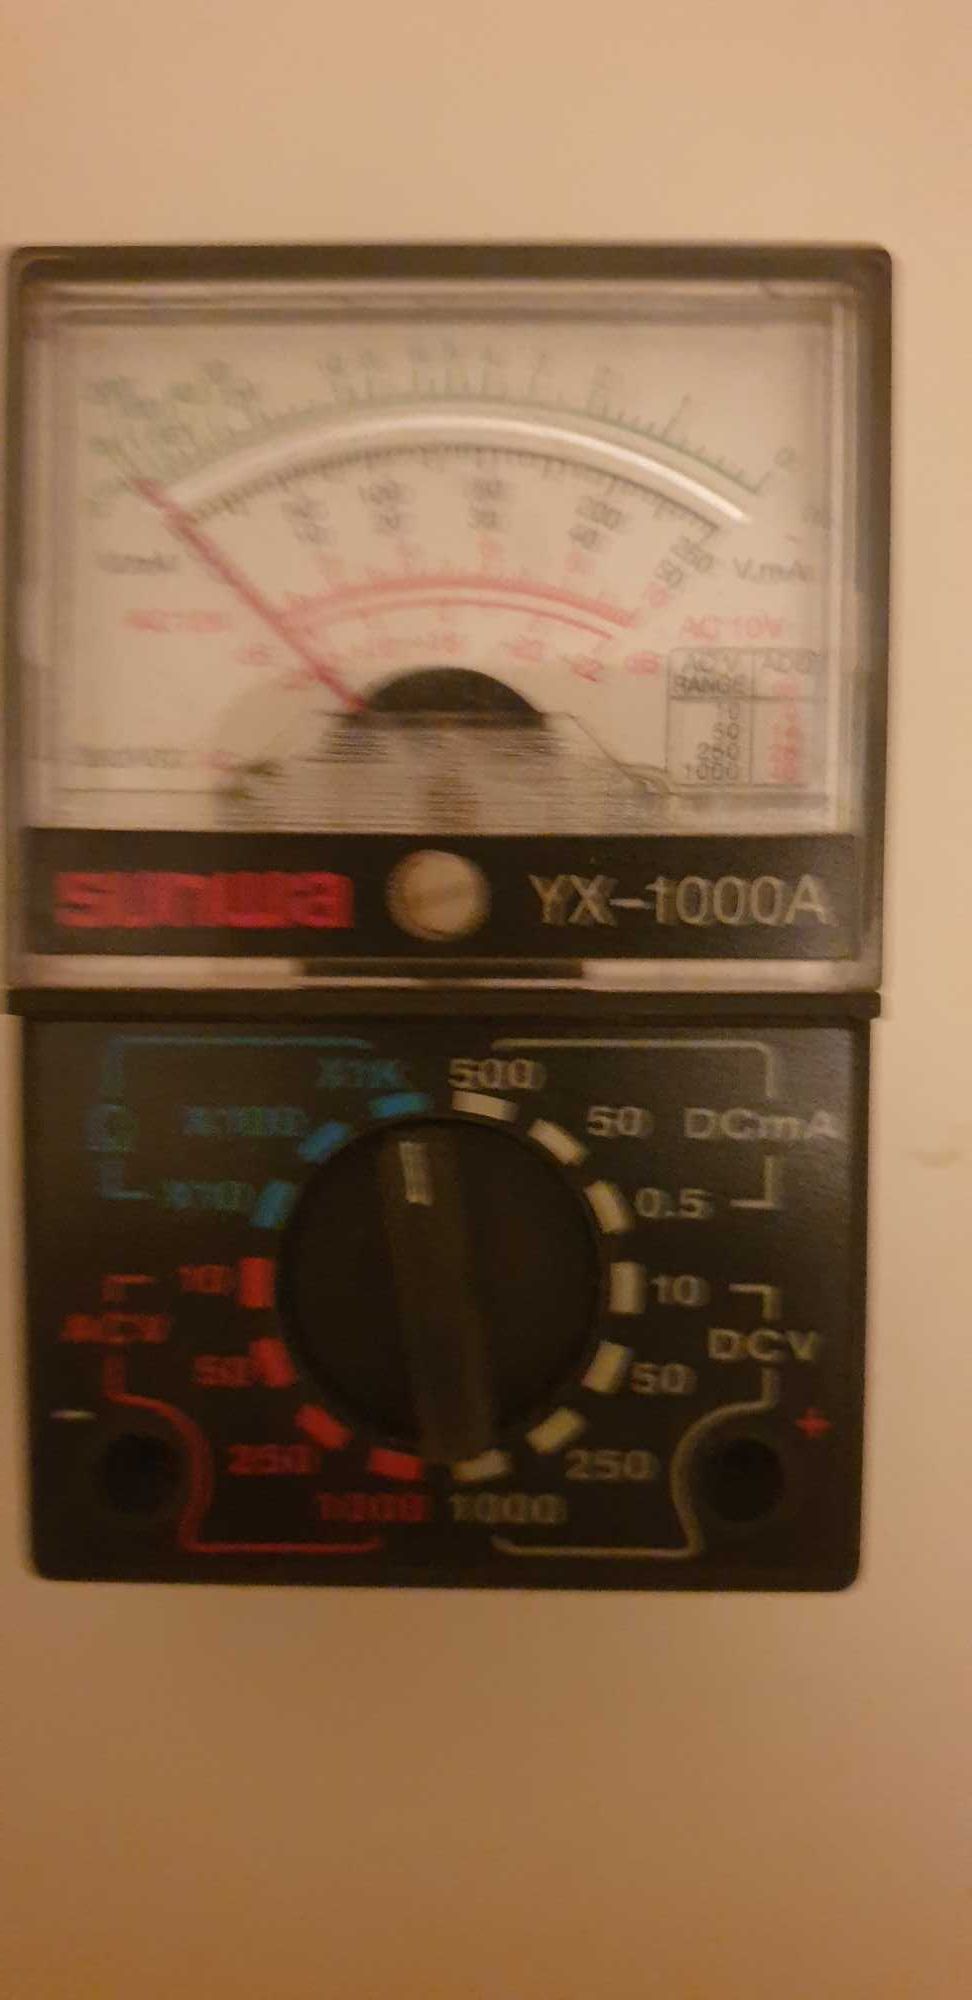 Multimetru (aparat de masura) analog Sunwa YX-1000A